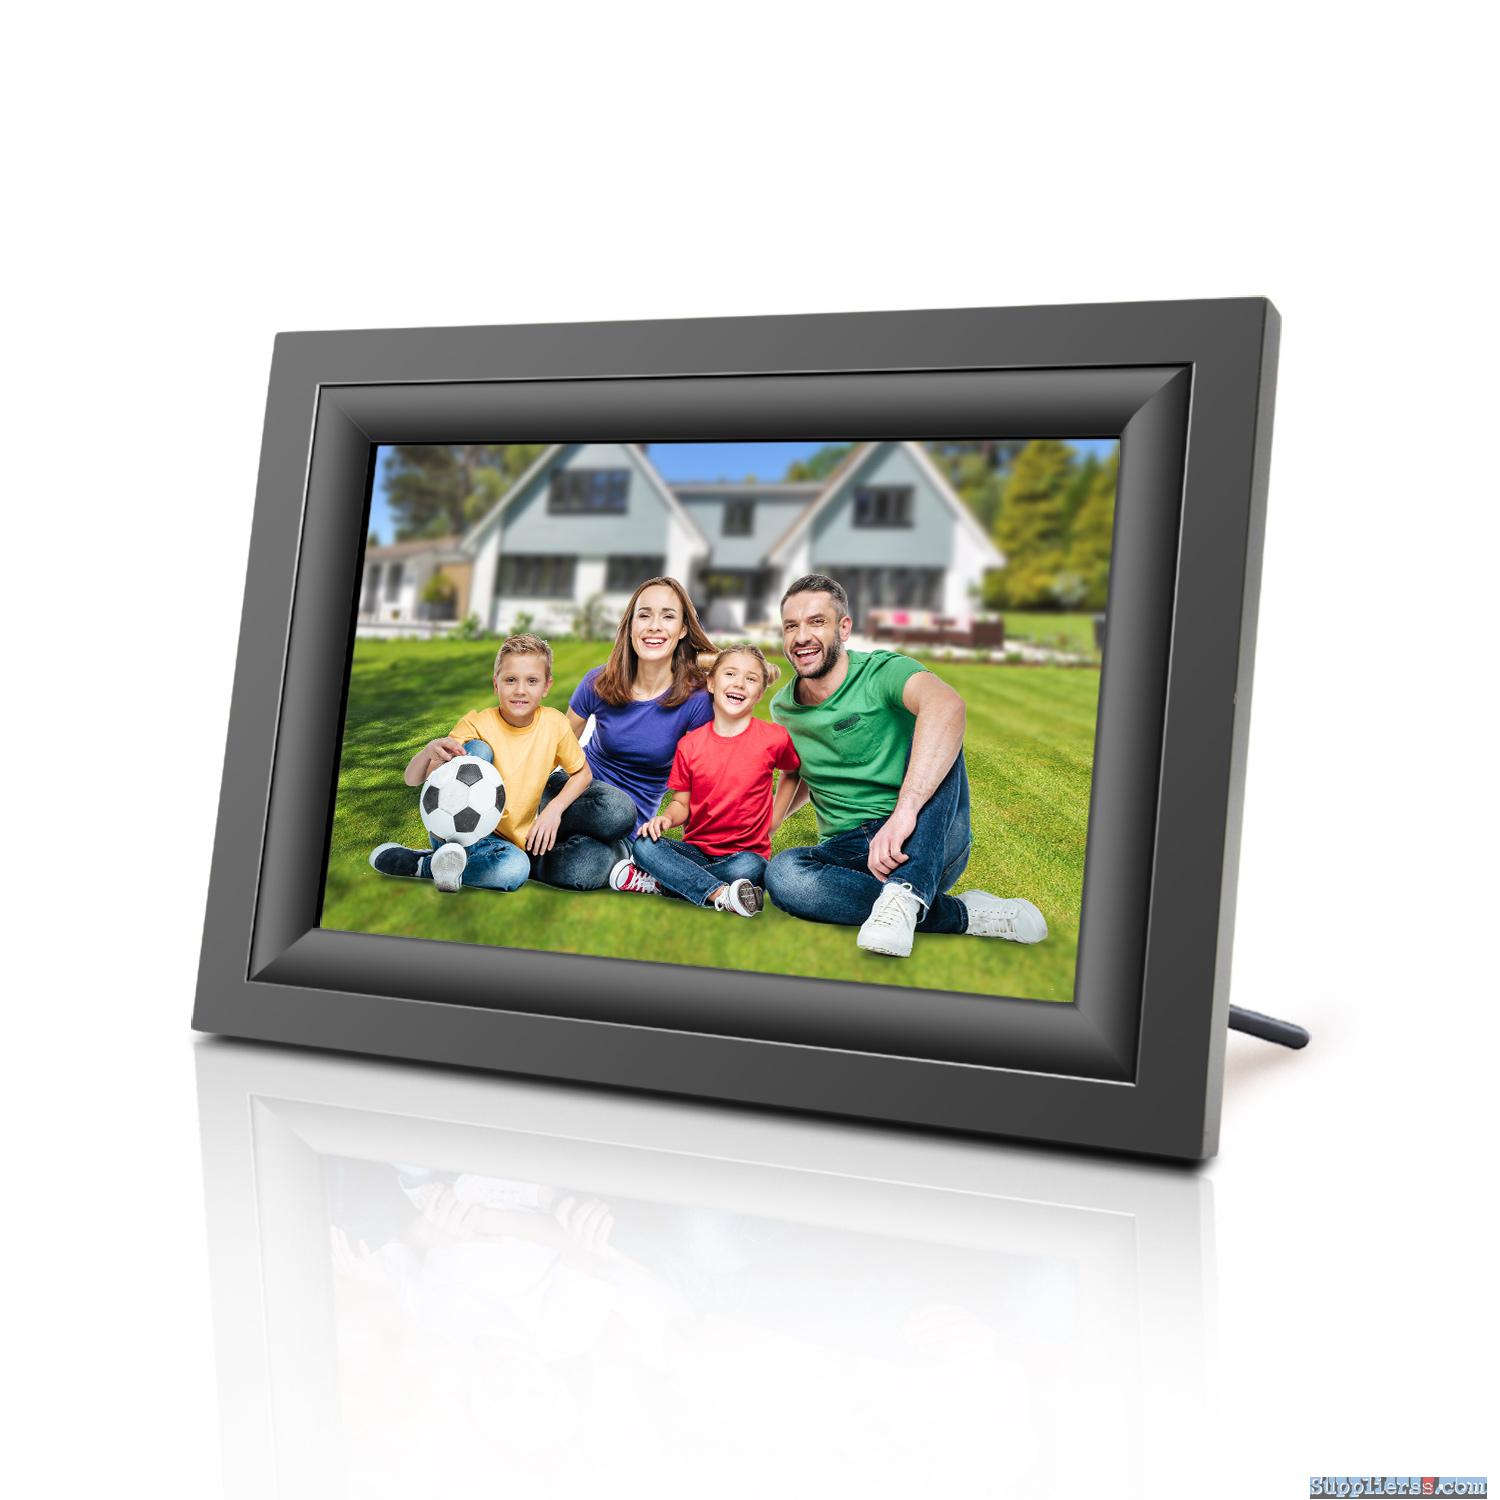 HDGenius 10 inch wifi digital picture frame in black wood frame